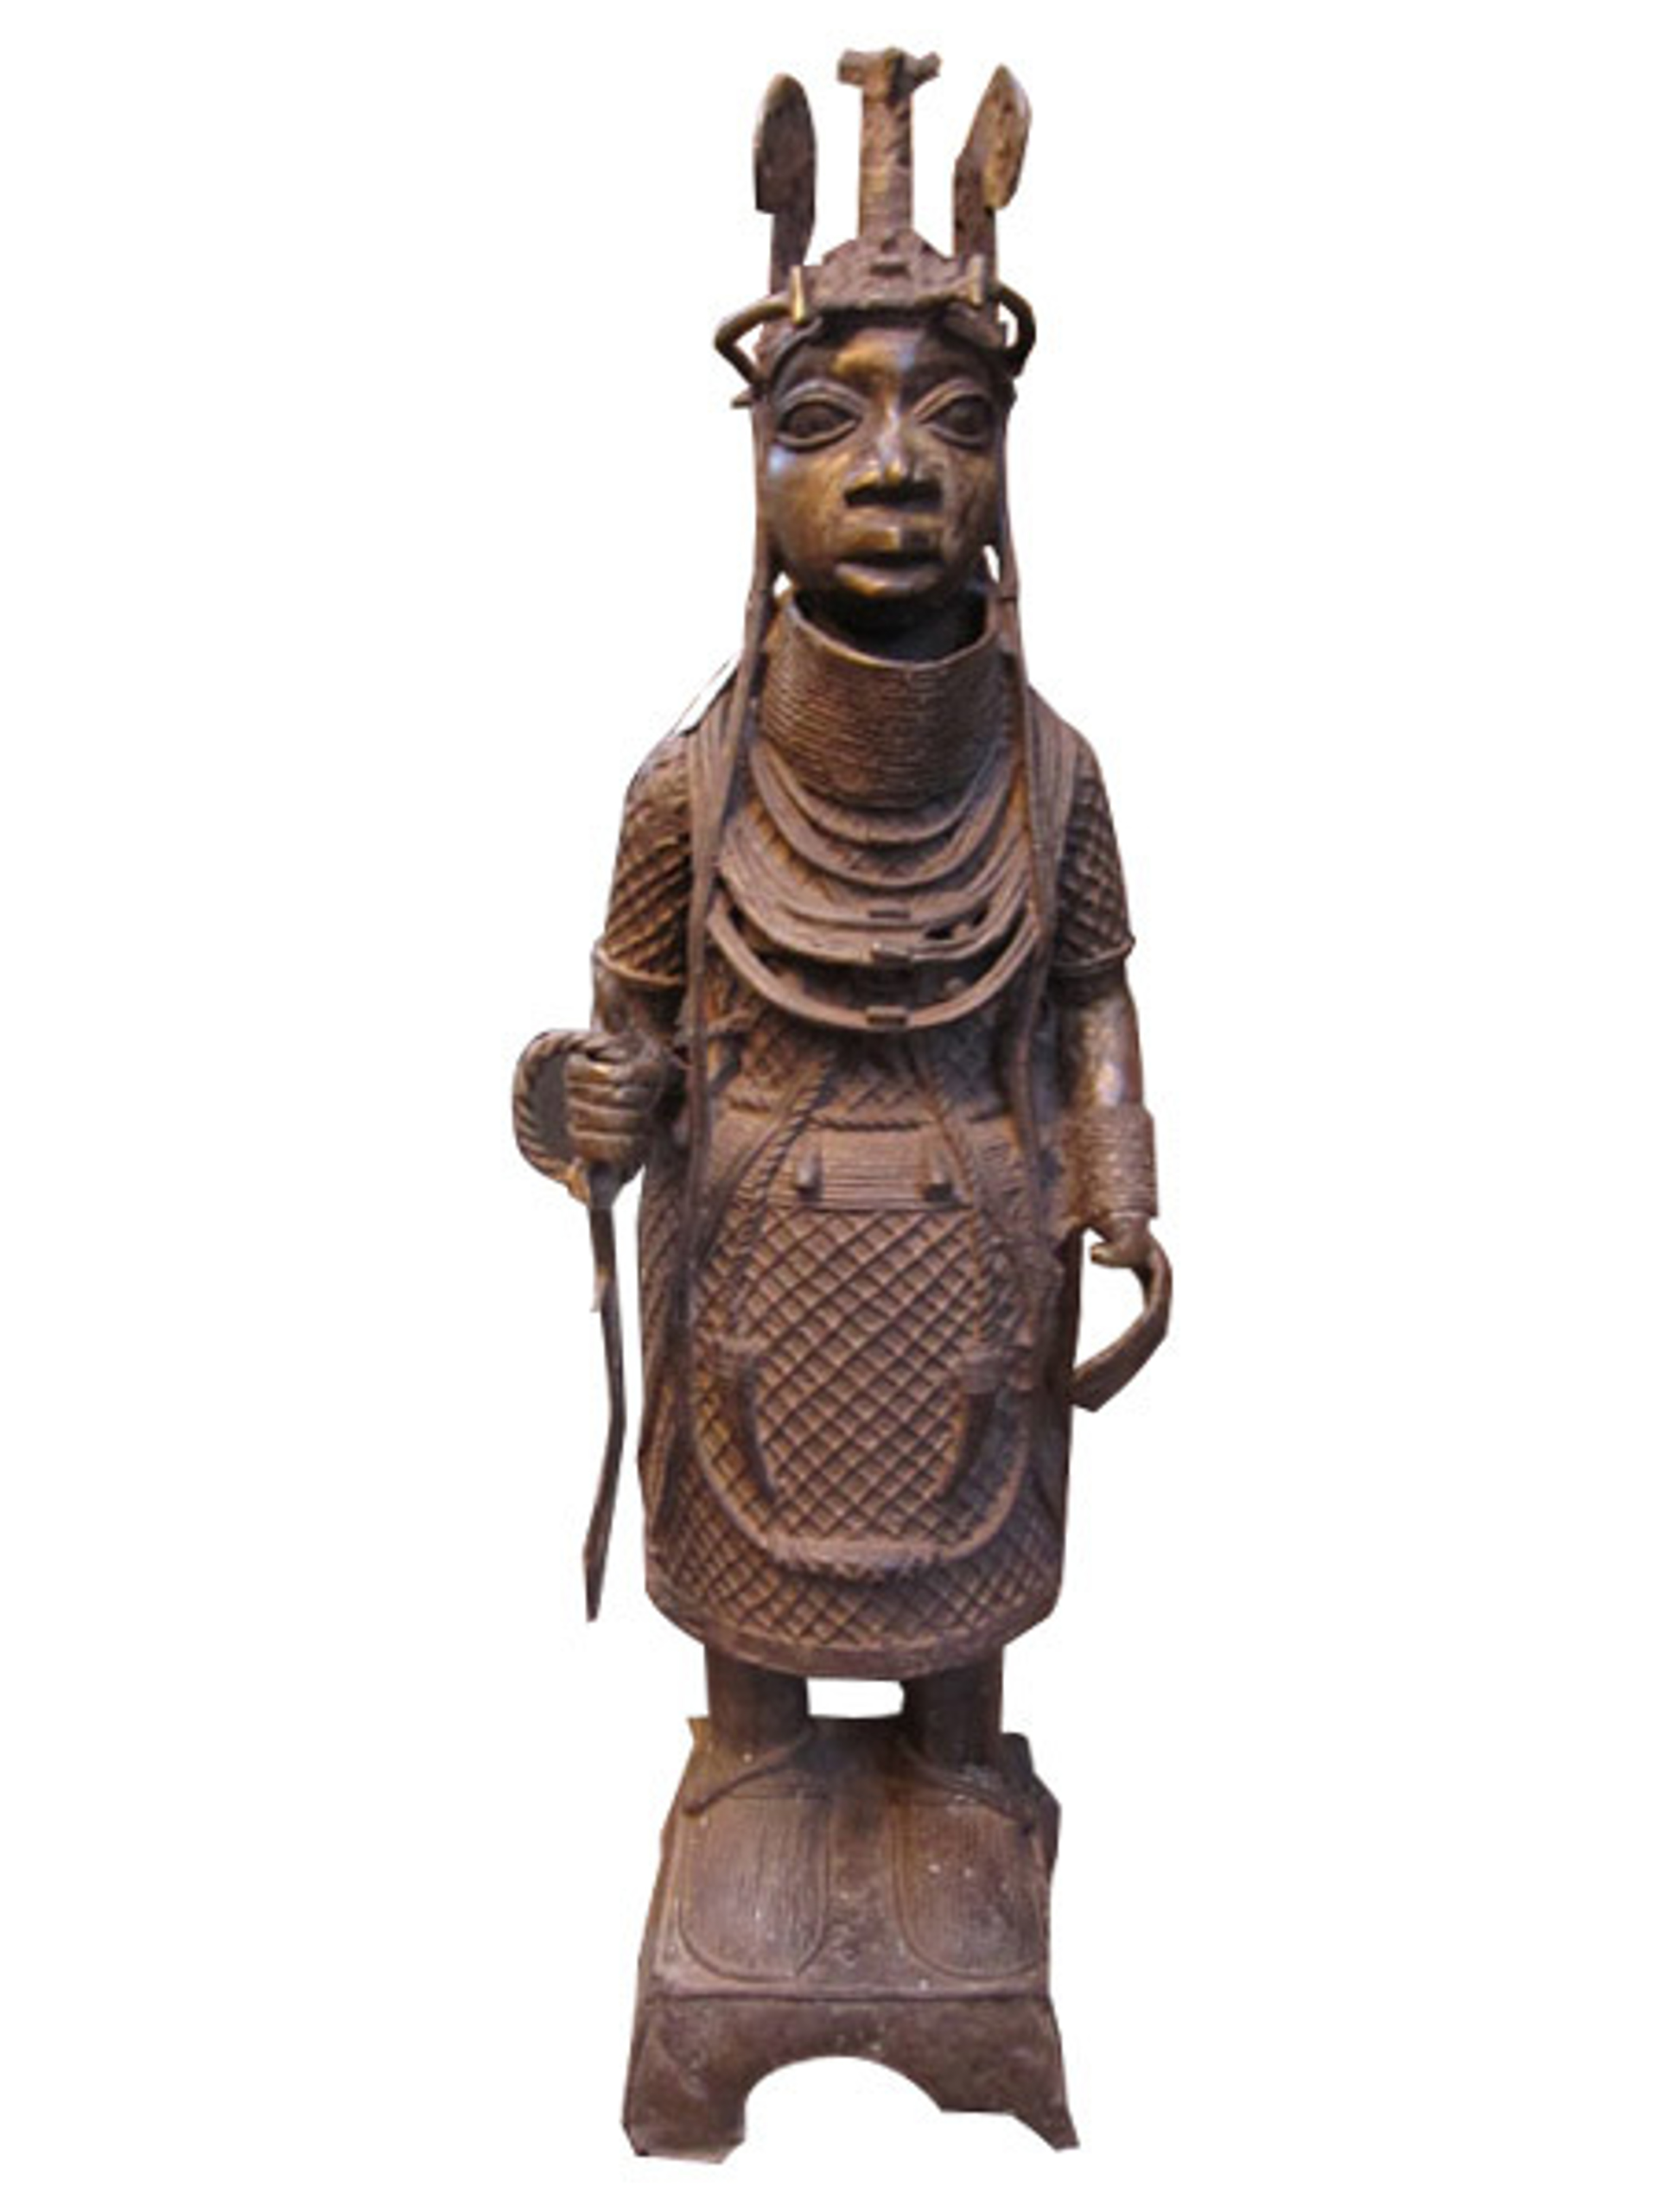 Benin King, Nigeria by African